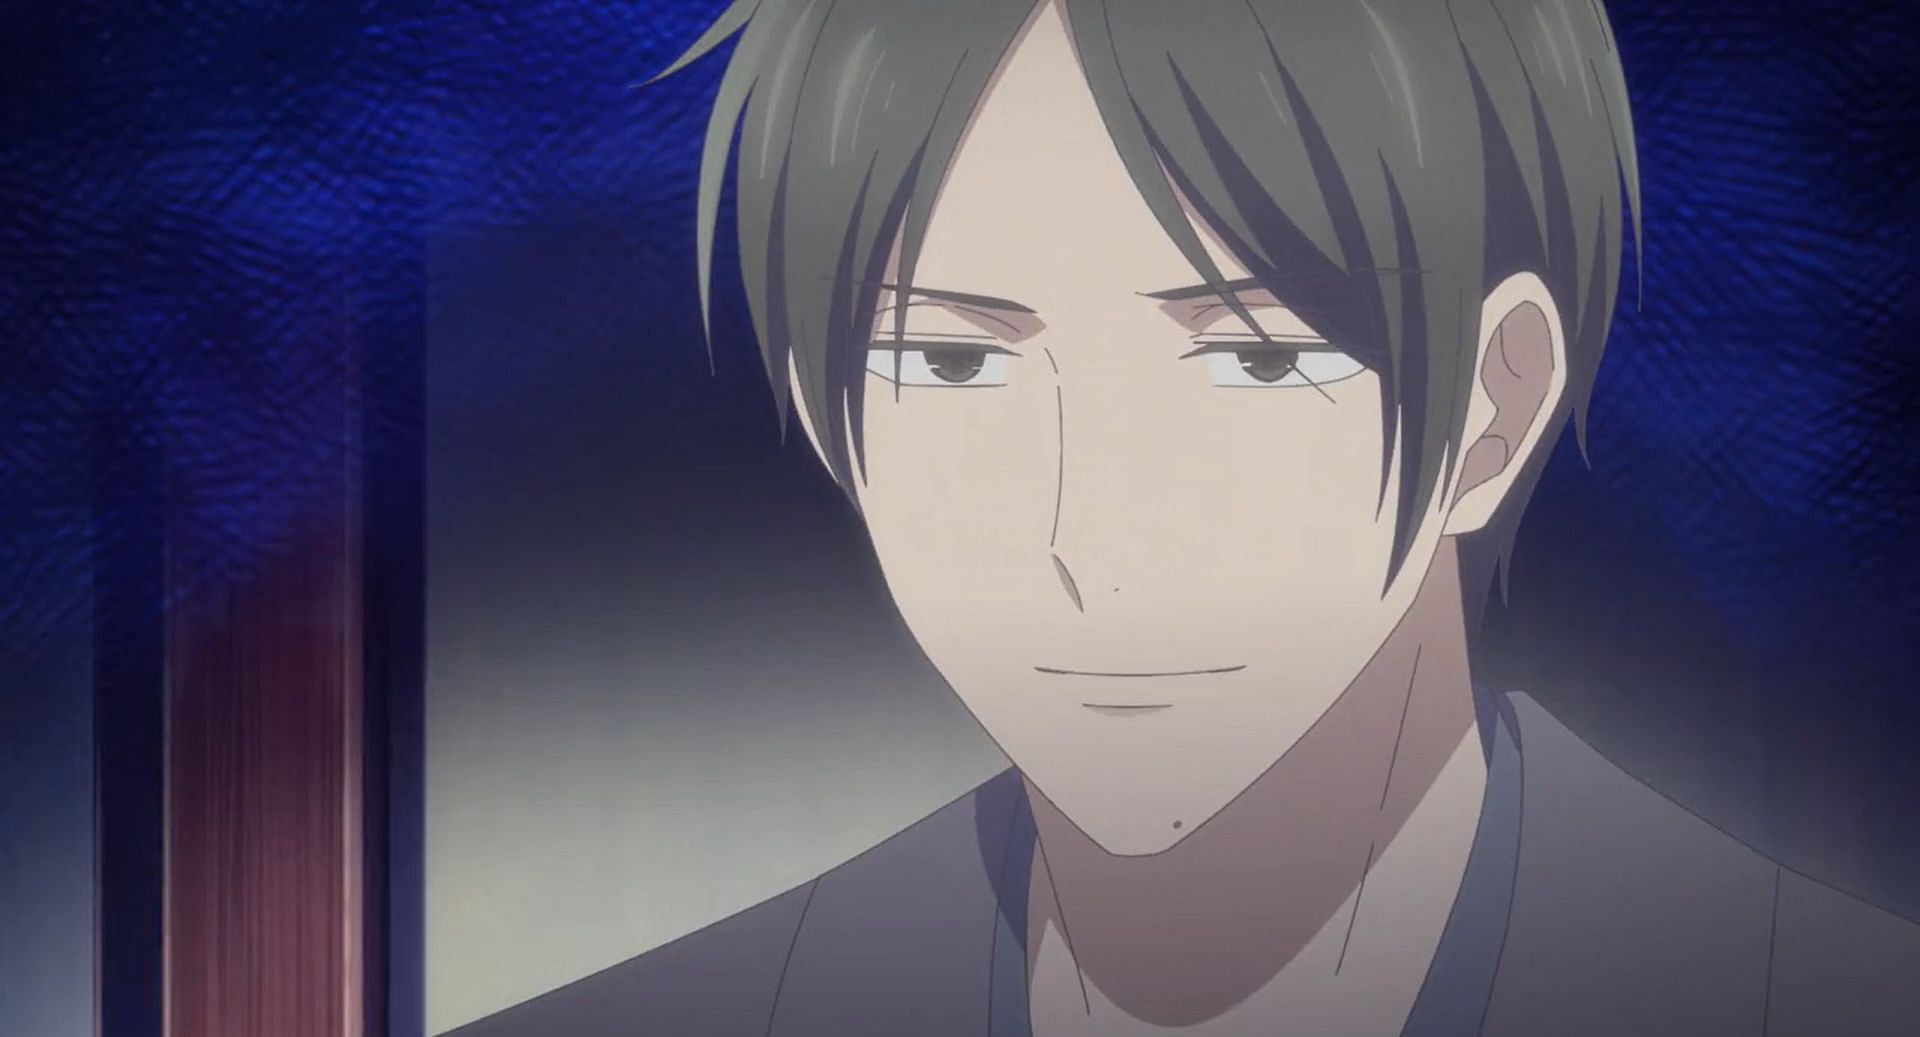 Hiromu as seen in the anime (Image via Studio DEEN)